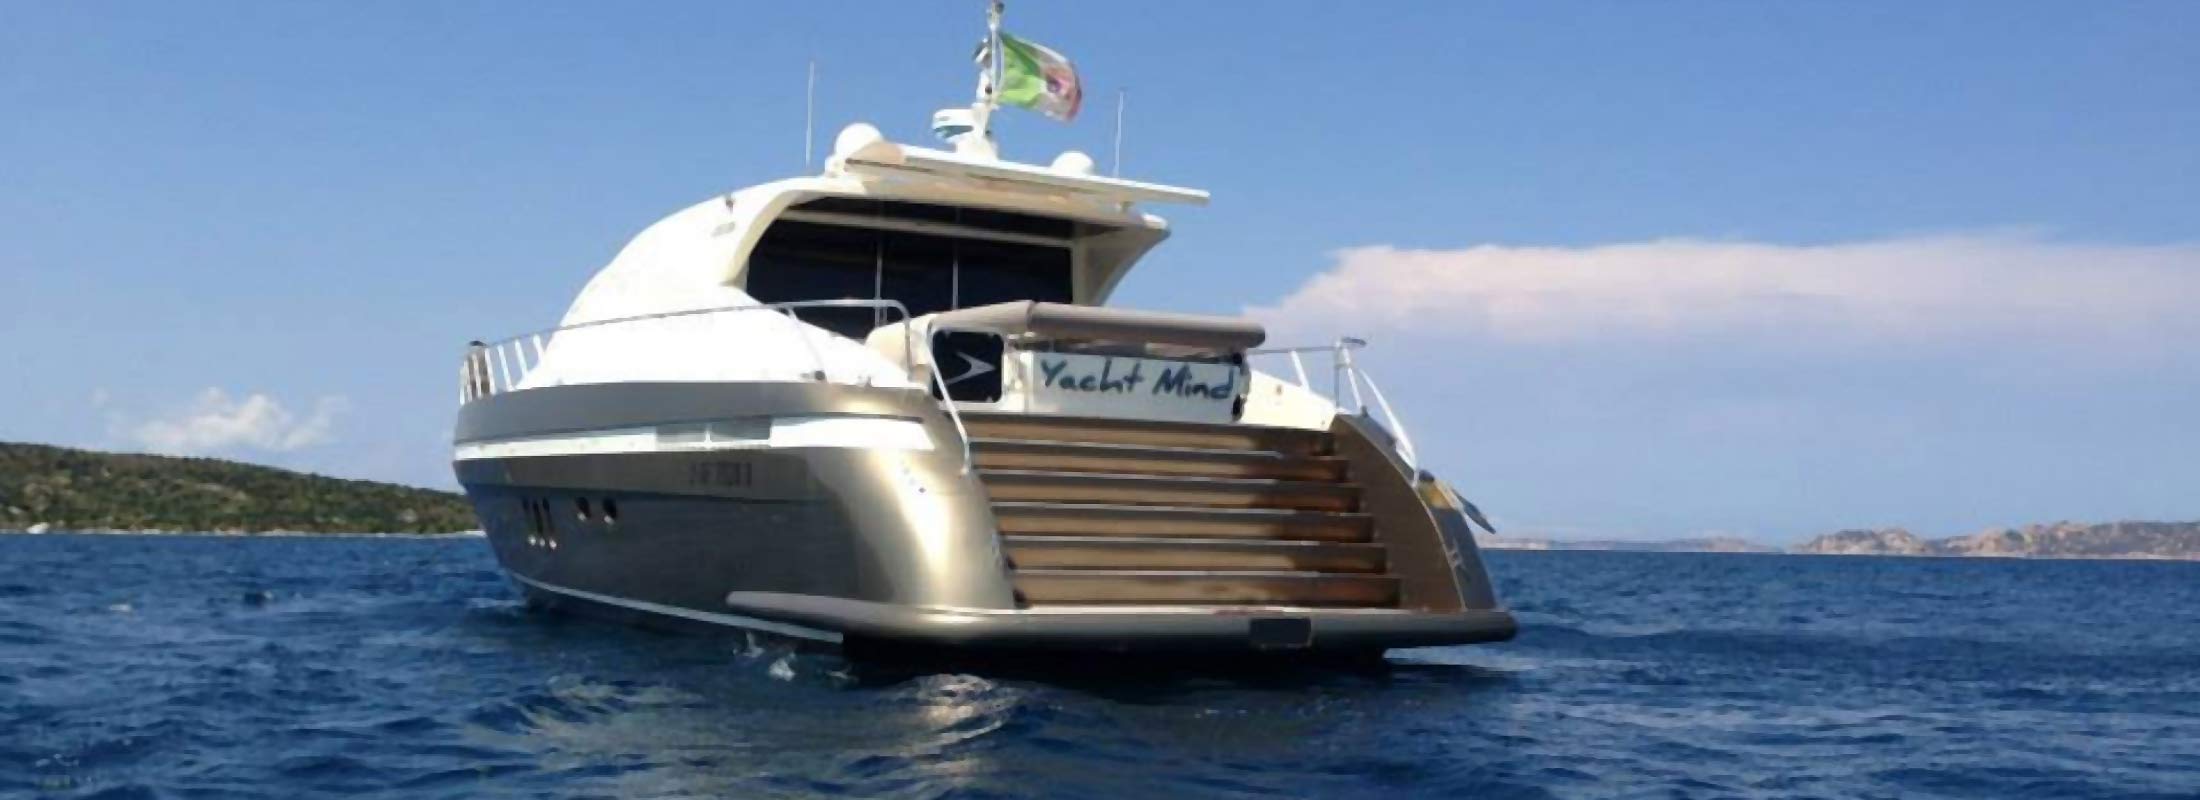 Yachtmind Motor Yacht for Charter Mediterranean slider 2